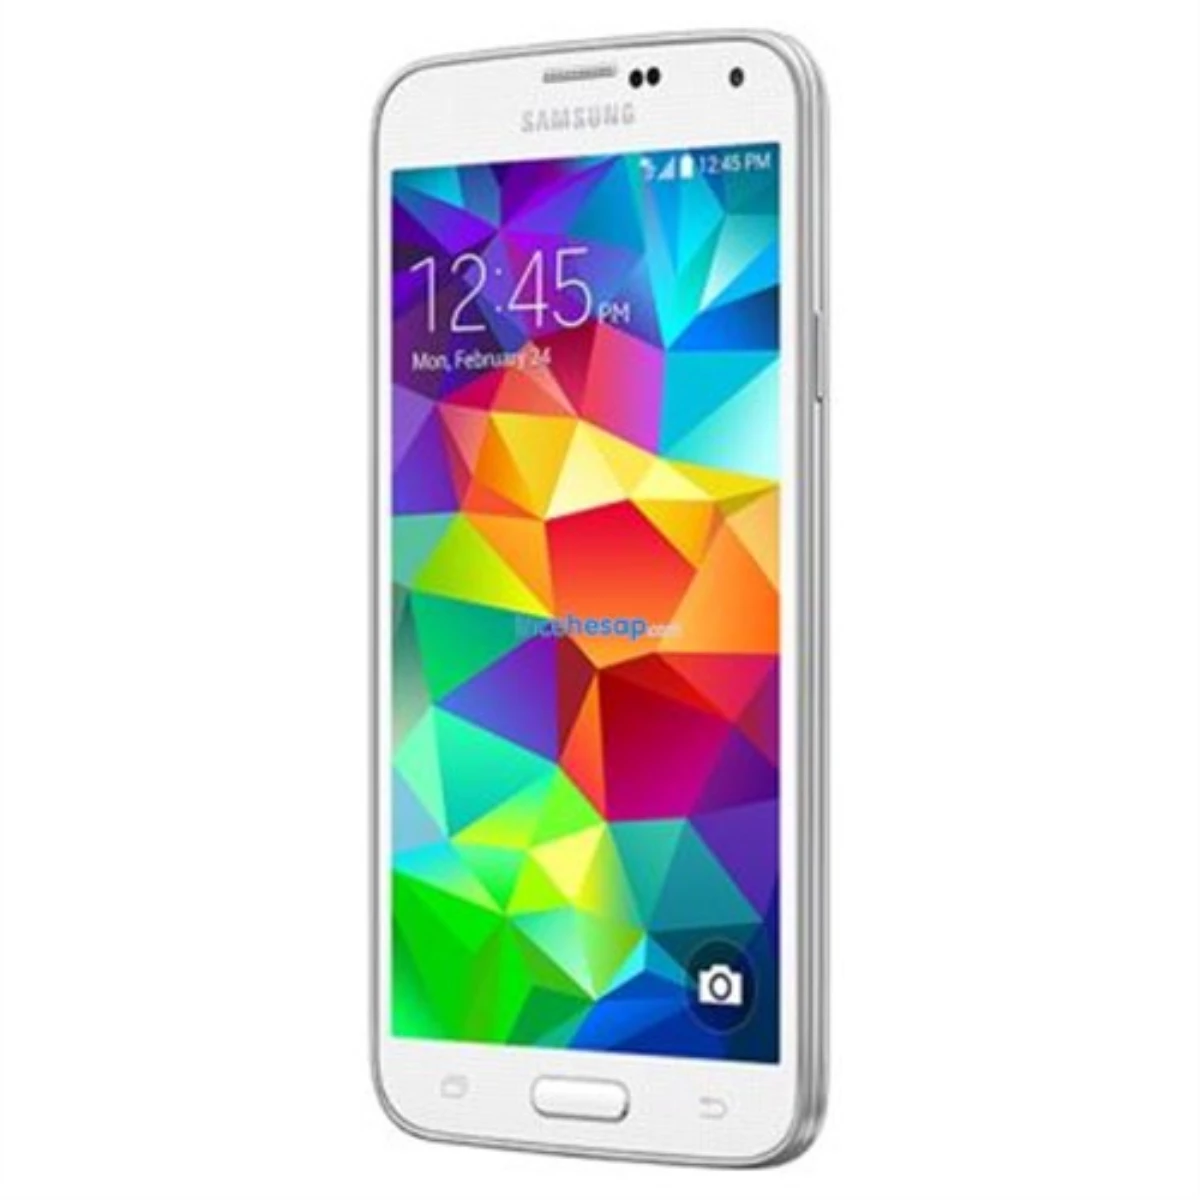 Samsung Galaxy G900h S5 16 Gb Beyaz Cep Telefonu